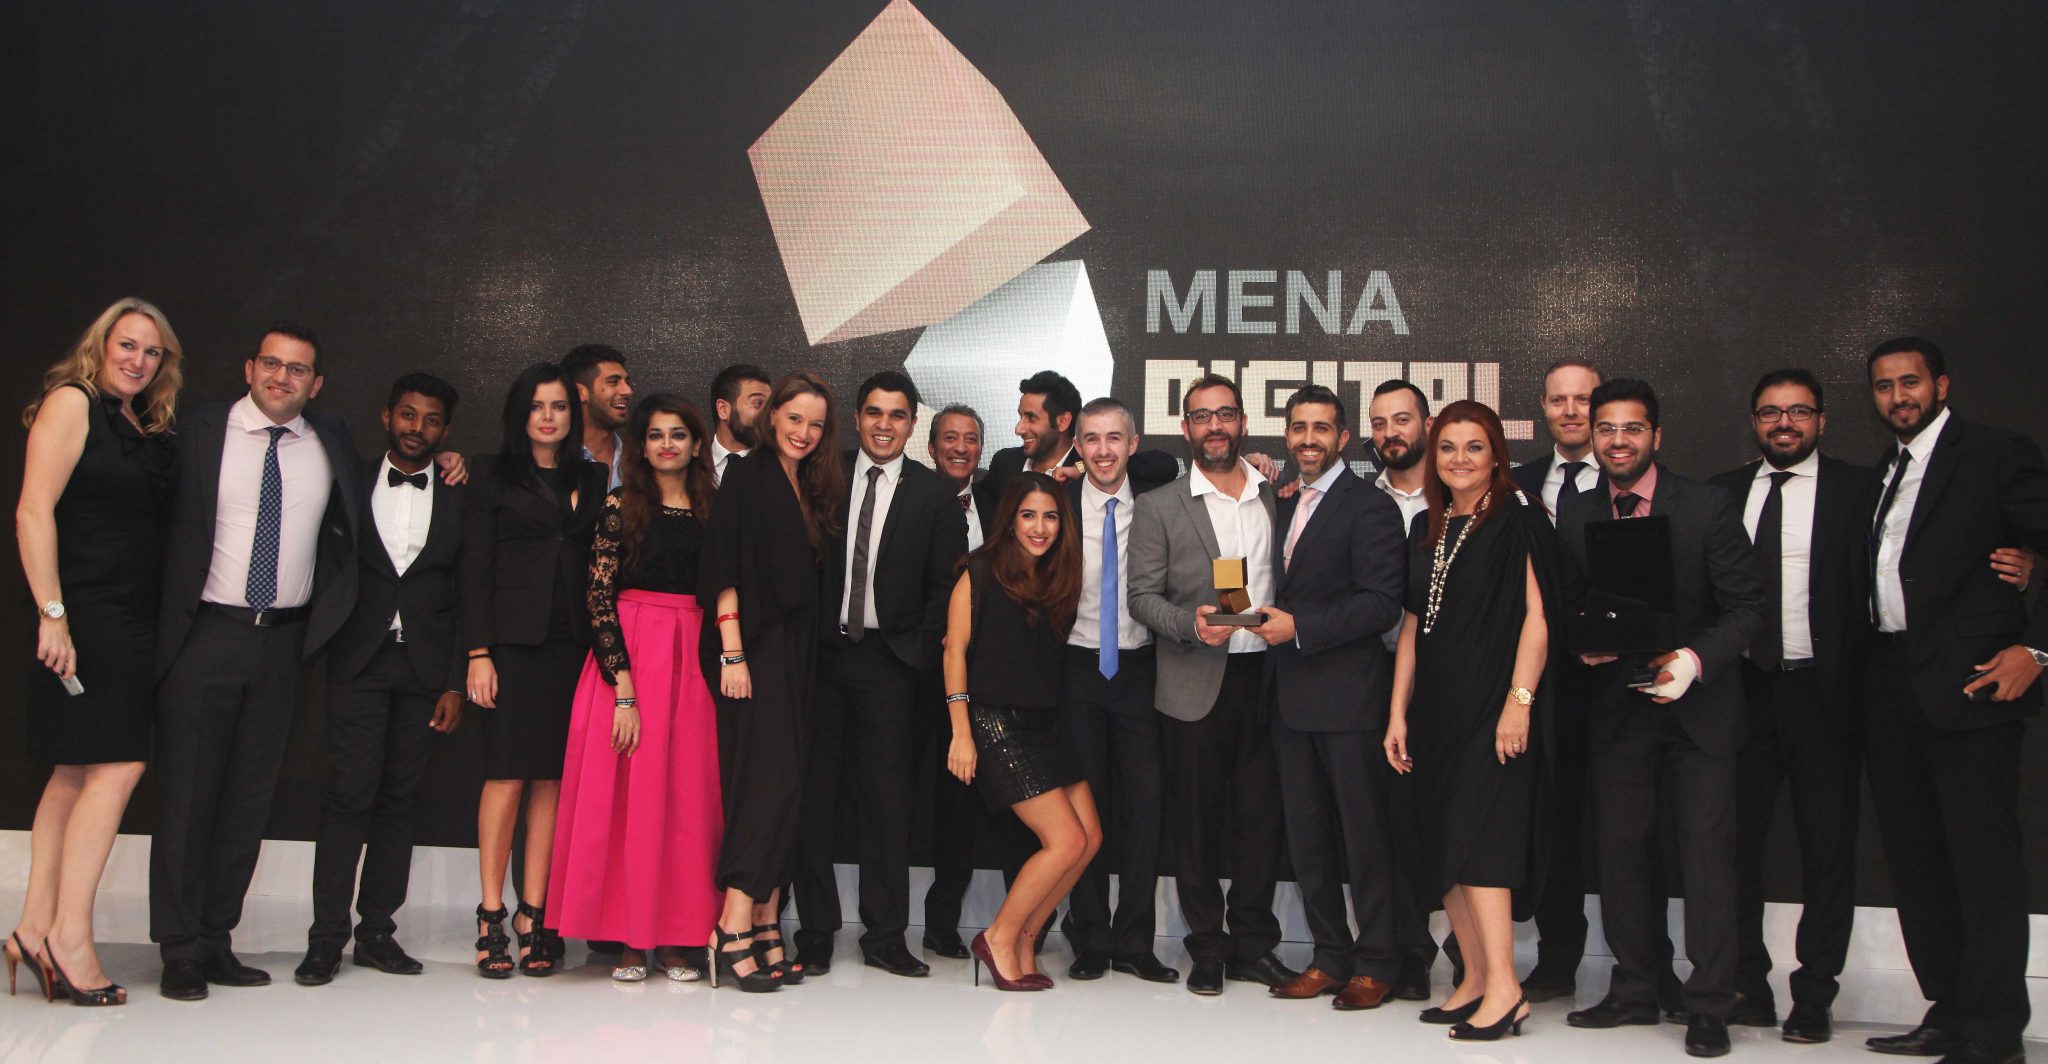 OMD named ‘Agency of the Year’ at the 2015 MENA Digital Awards